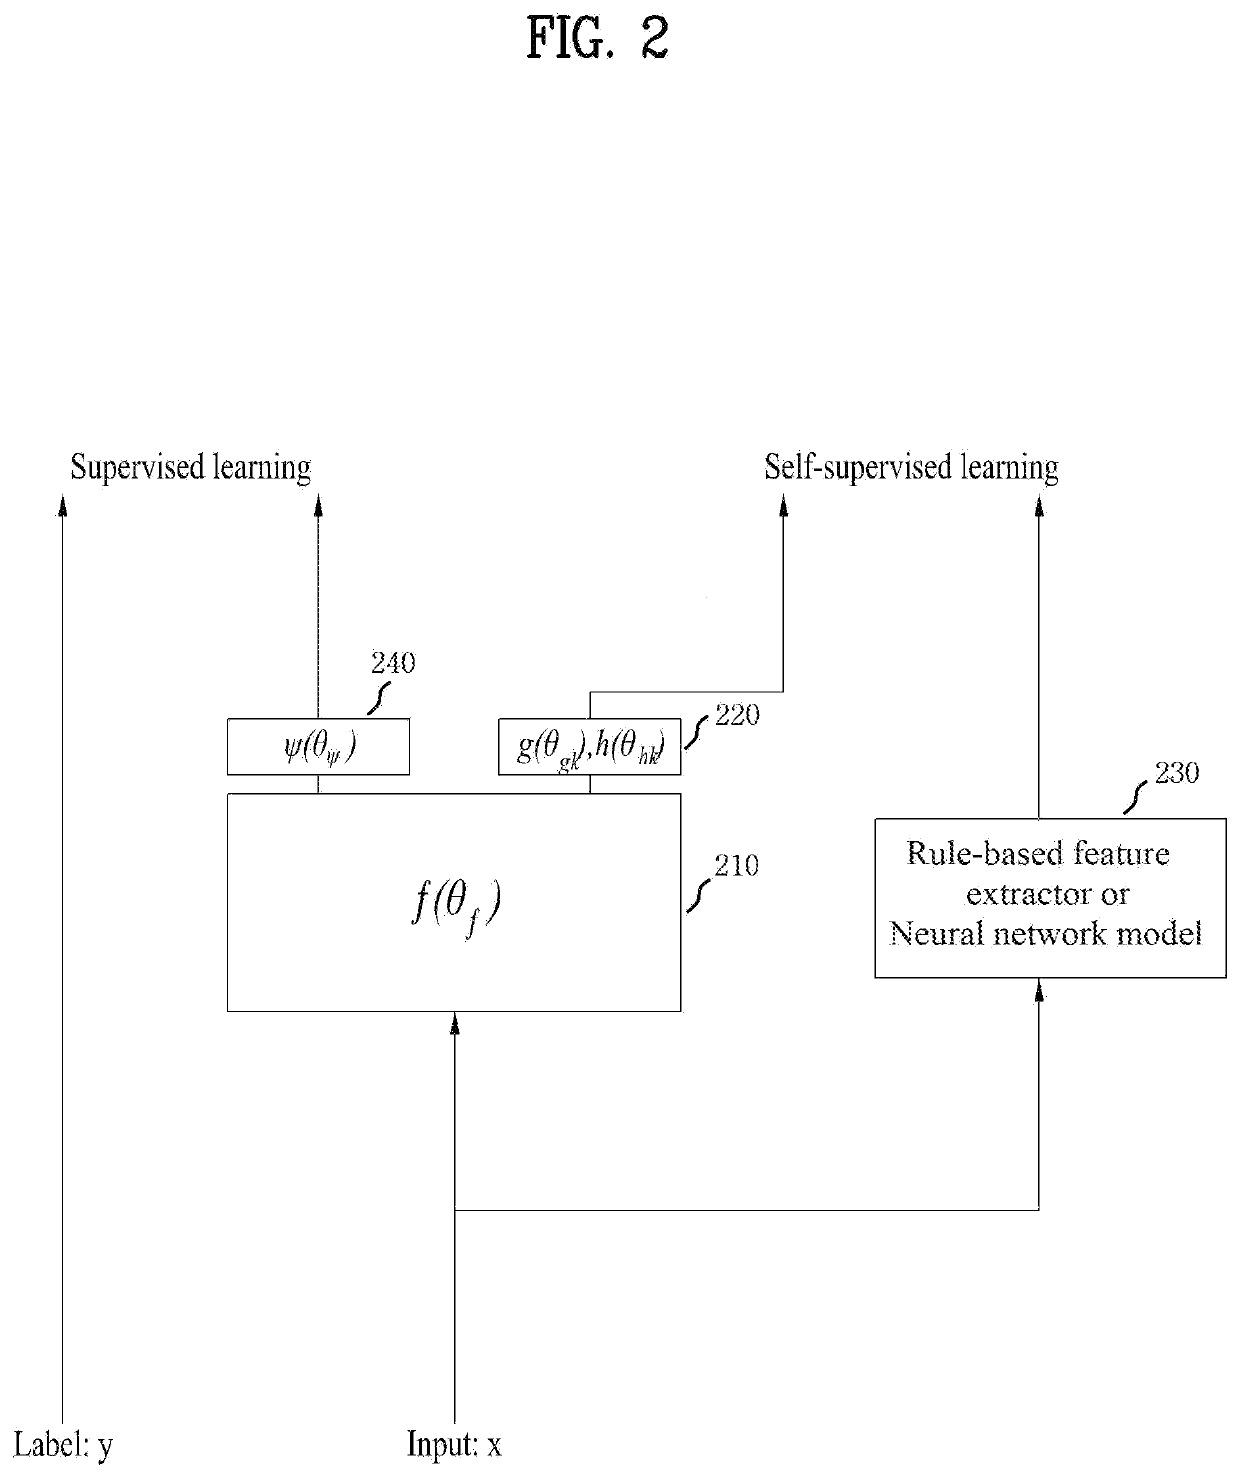 Deep neural network pre-training method for classifying electrocardiogram (ECG) data